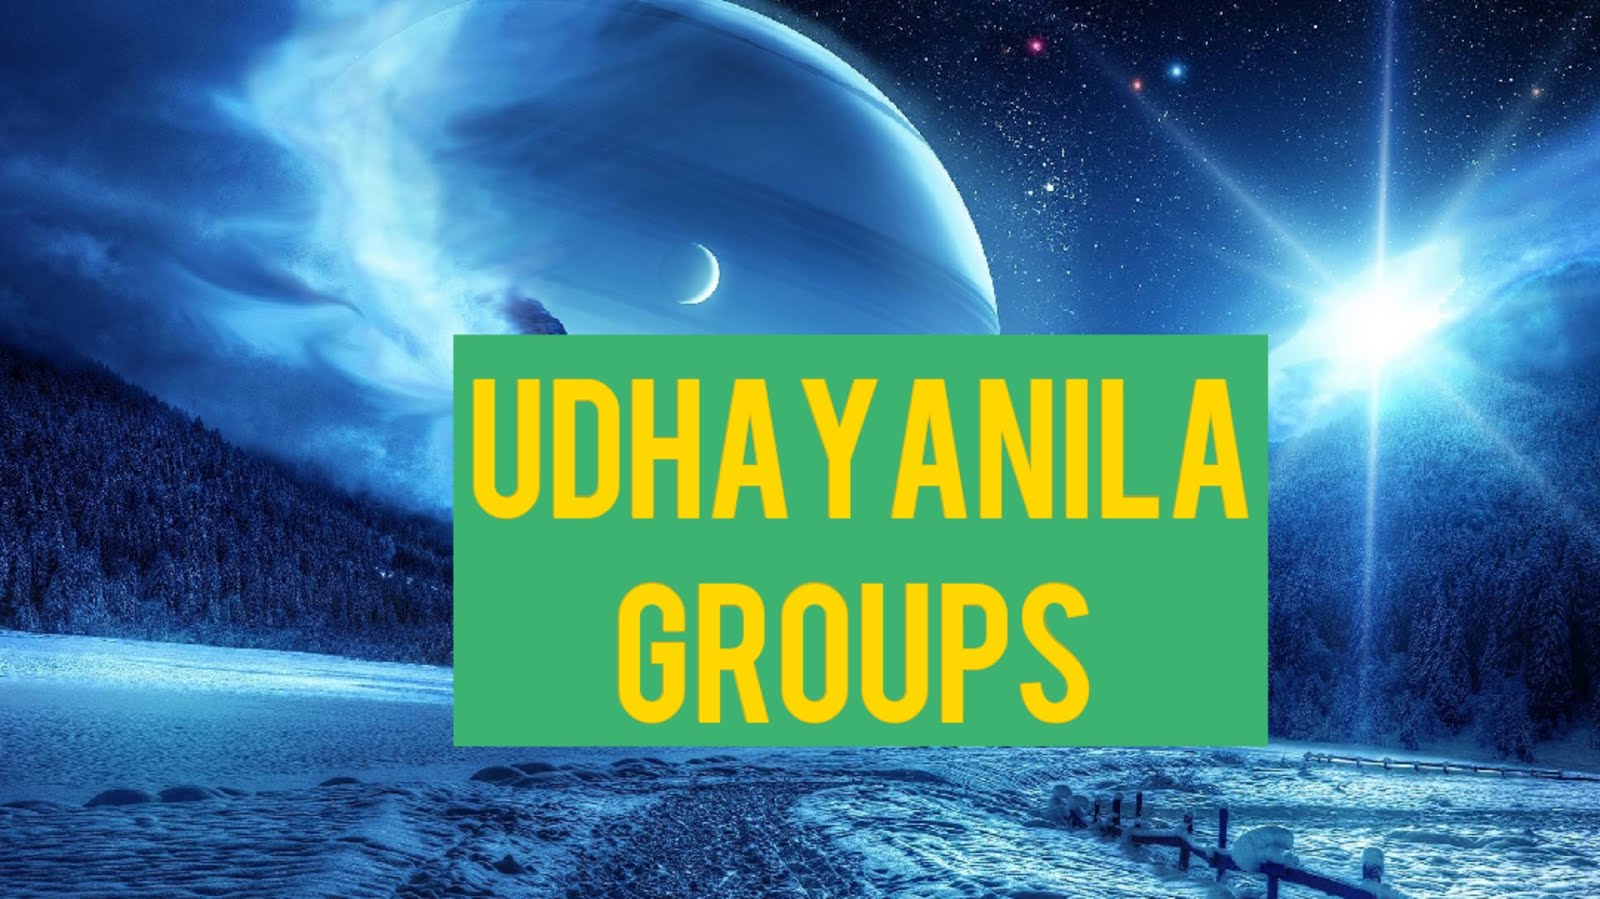 UDHAYANILA GROUPS